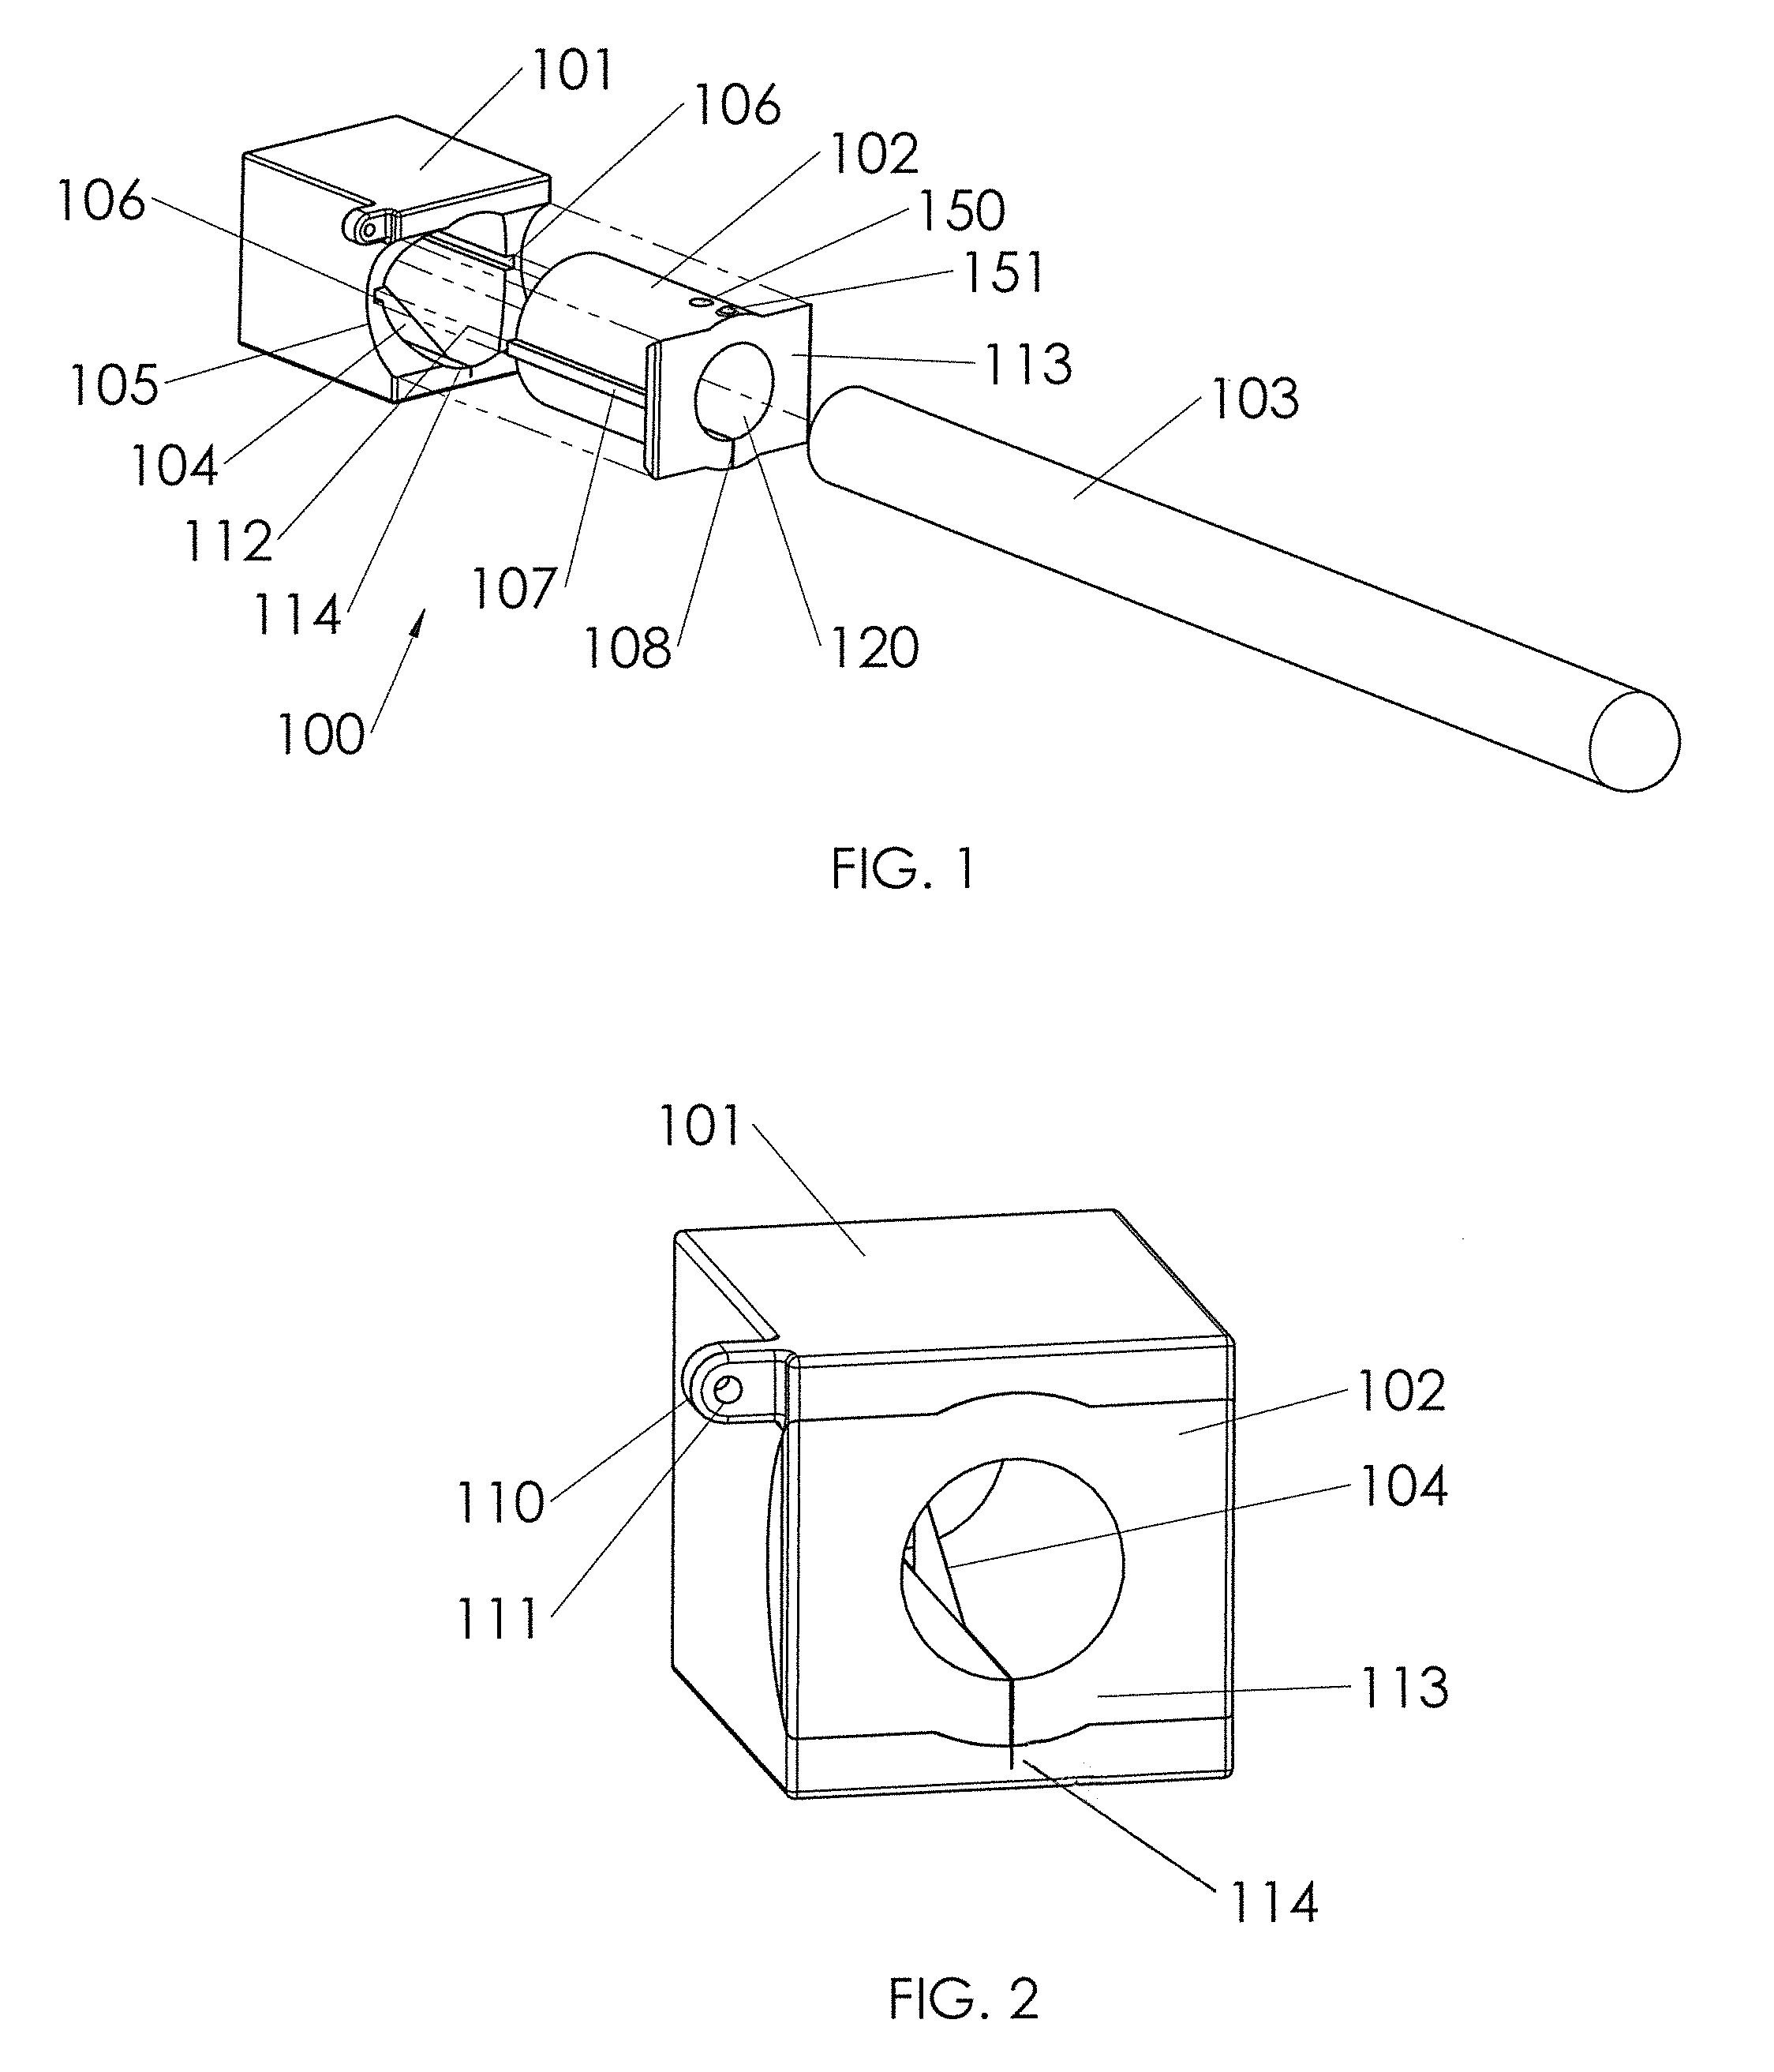 Size-adaptable cigar splitter apparatus